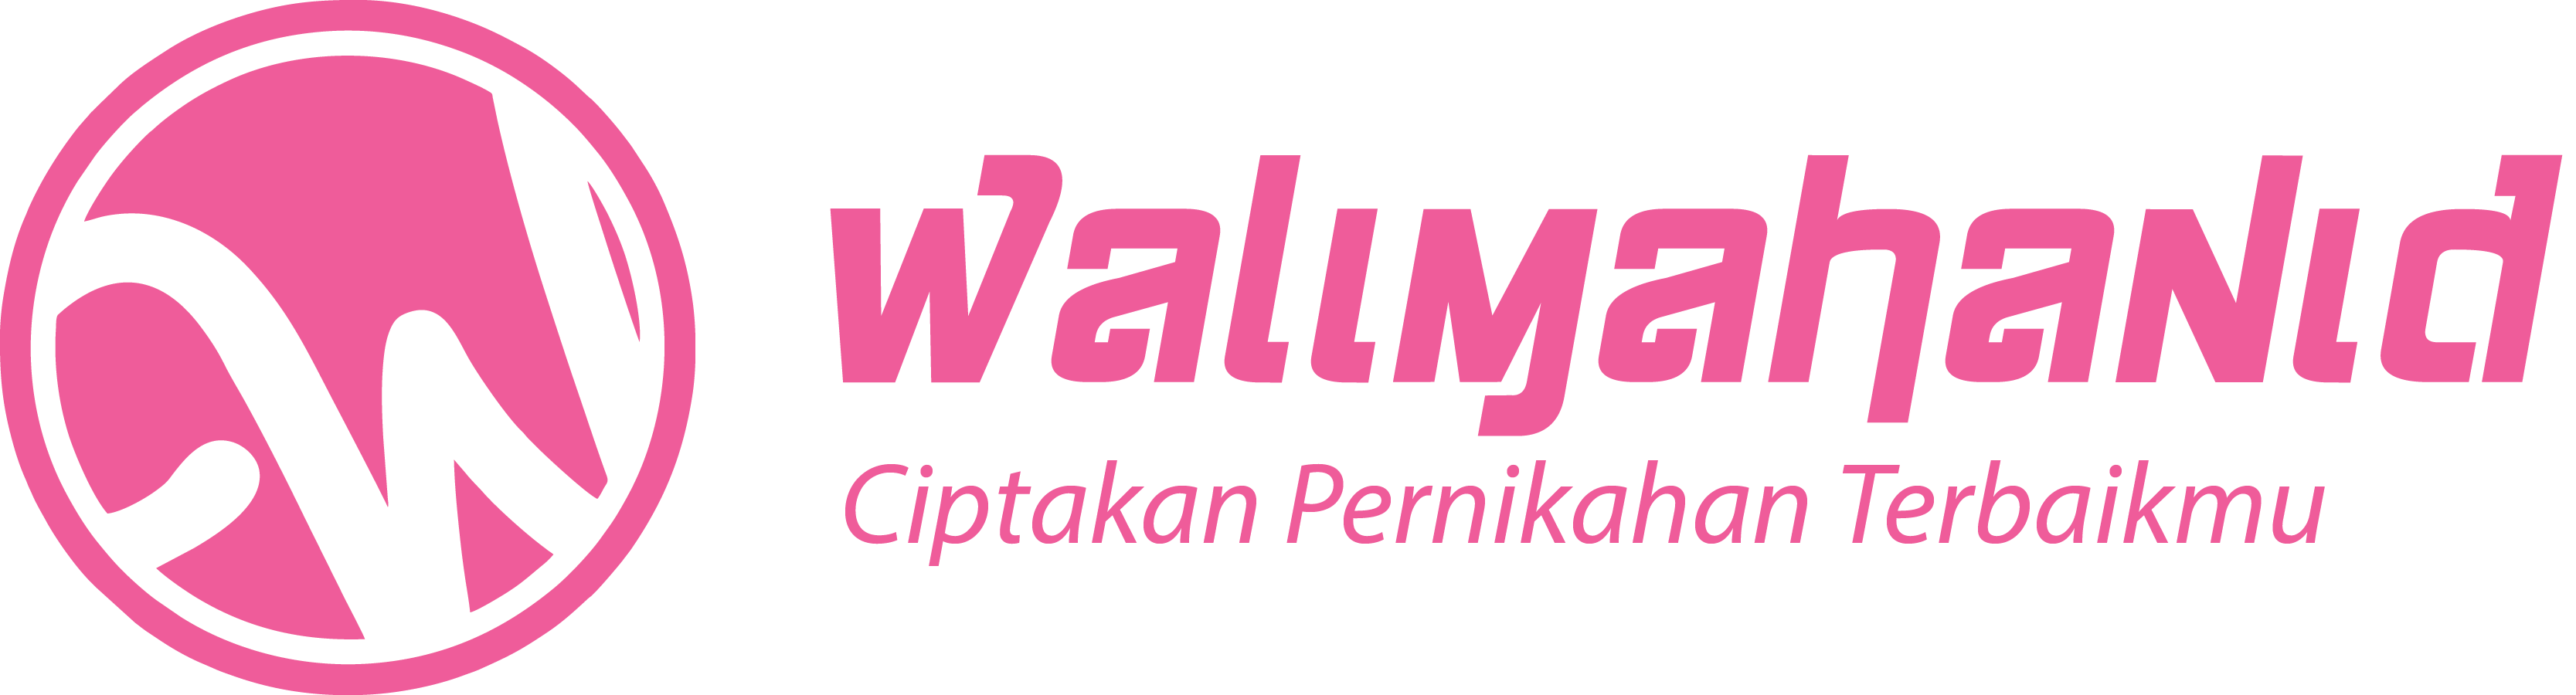 Cetak Undangan Pernikahan & Foto Wedding di Tangerang - Logo Walimahanid